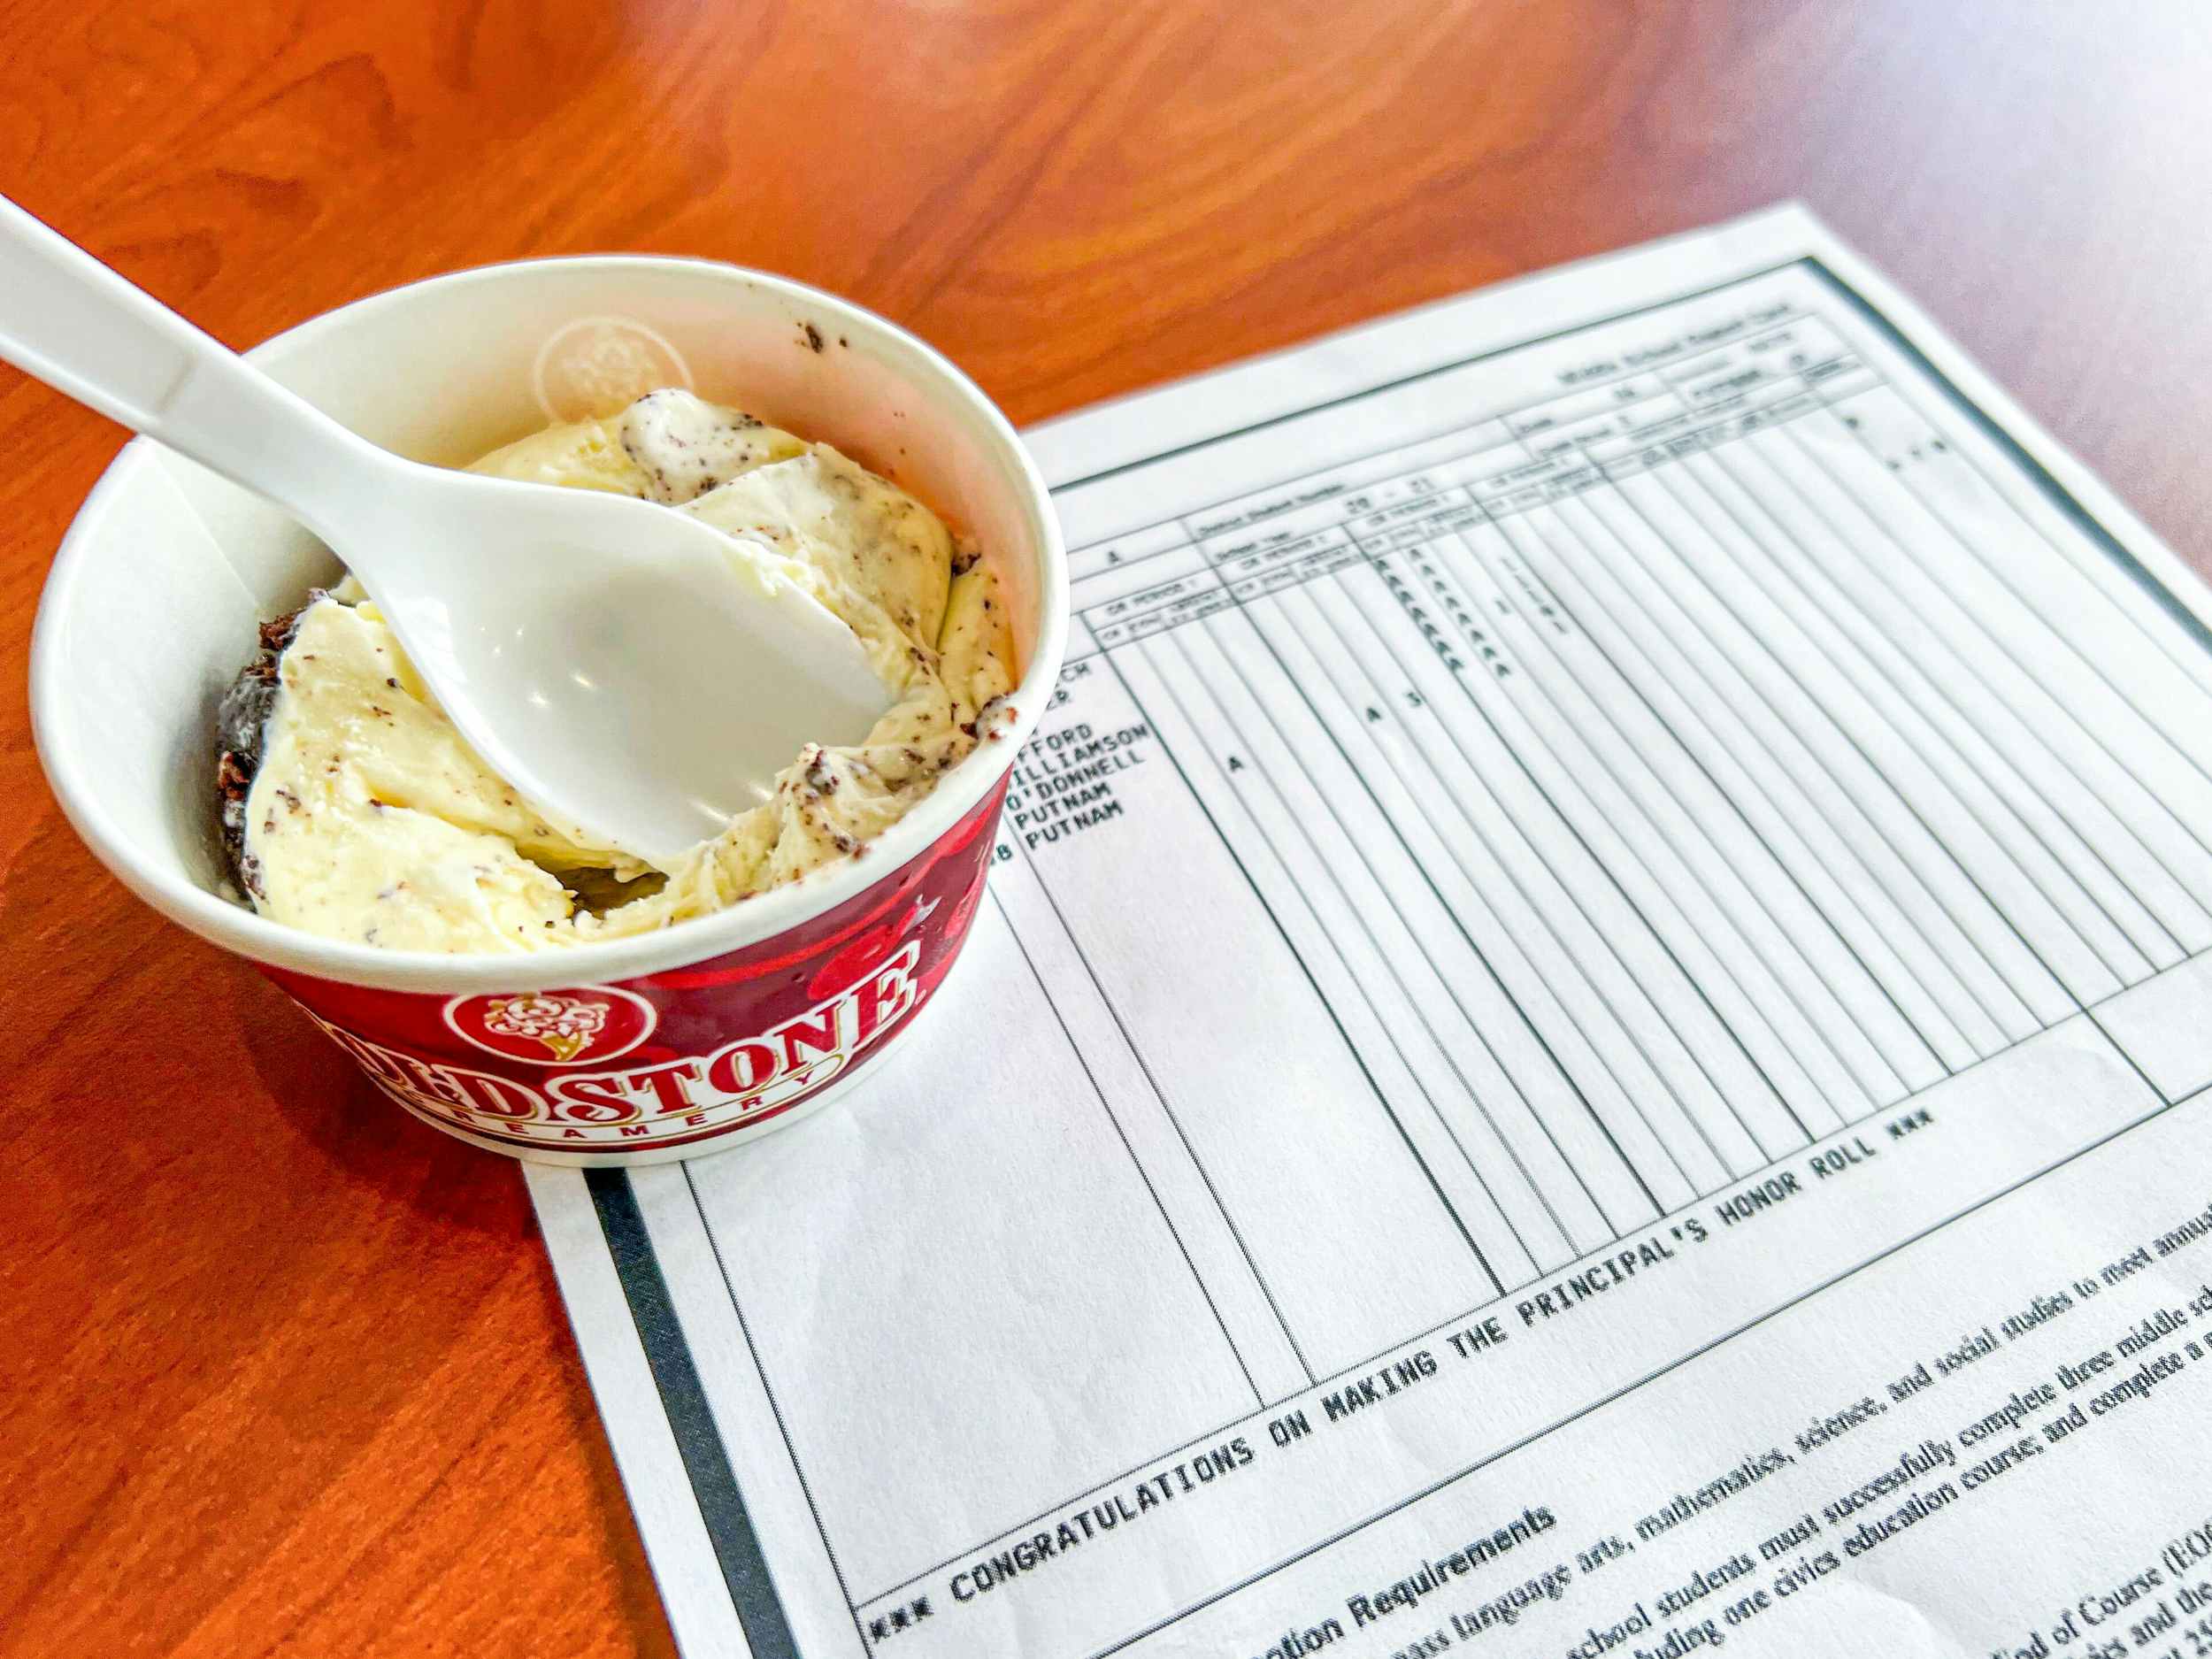 coldstone creamery ice cream next to a child's report card